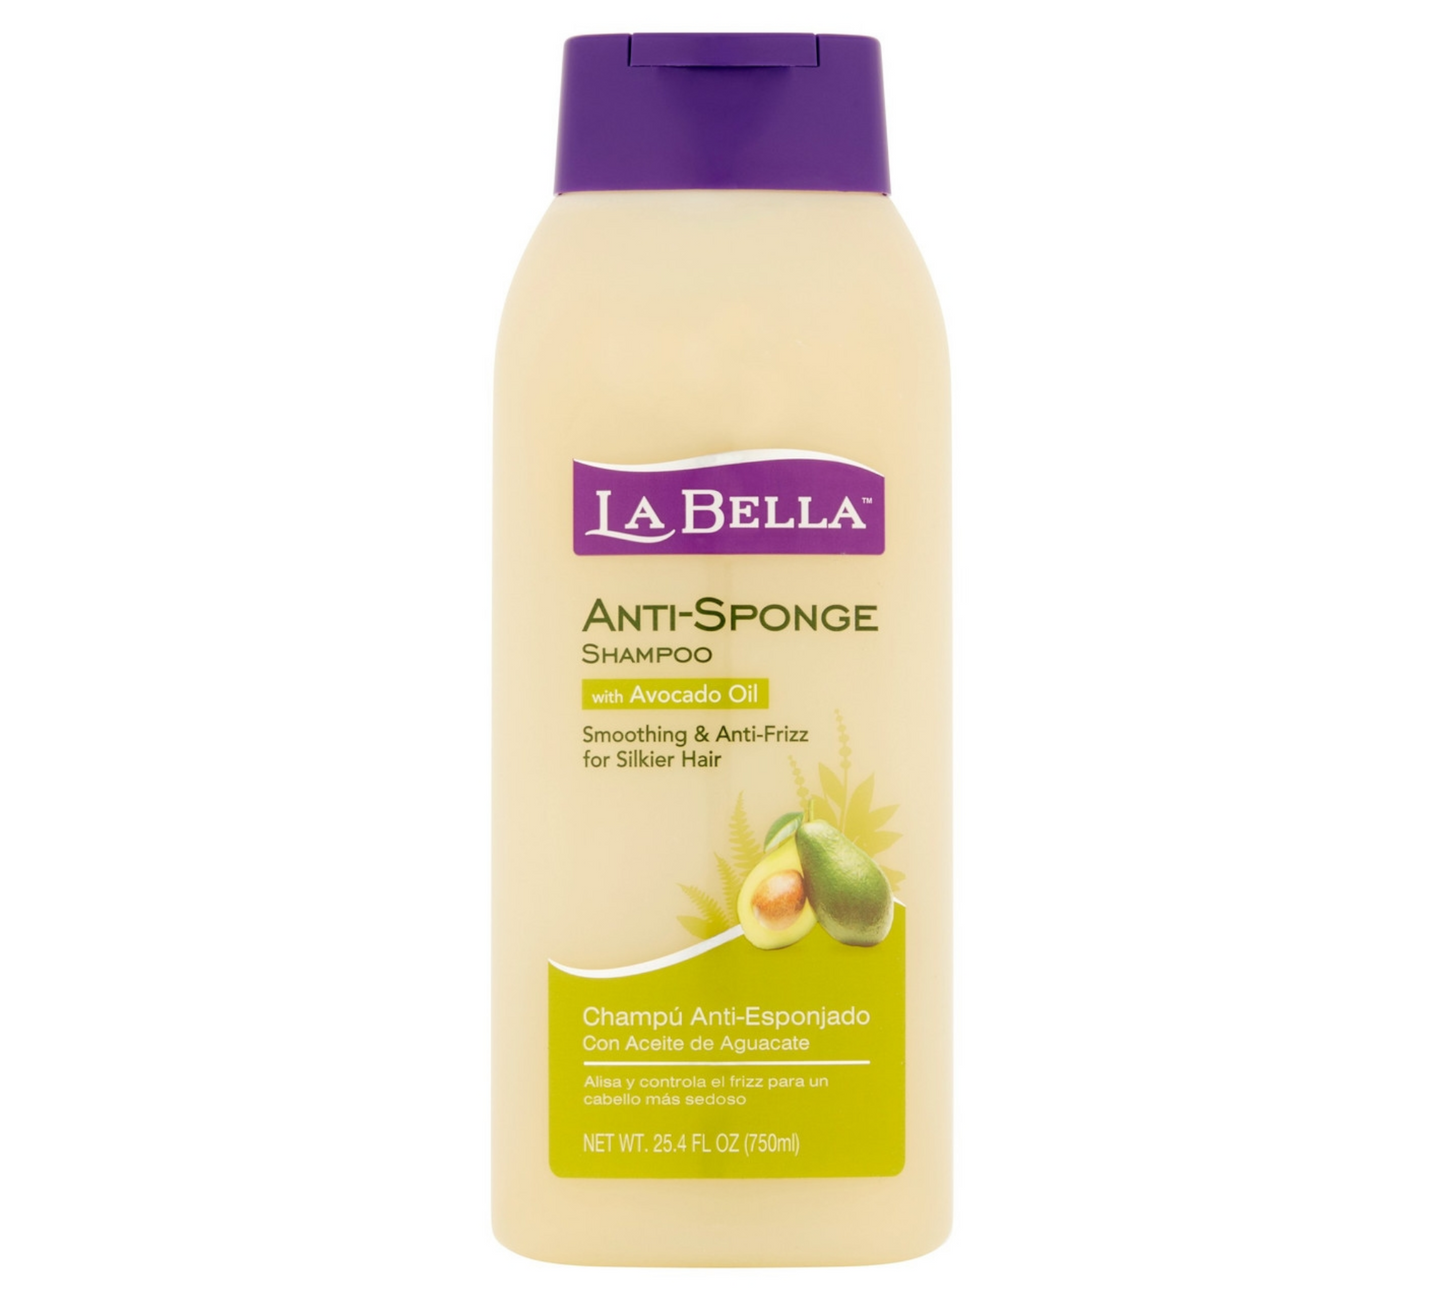 La Bella Cupid Beauty Supplies 25.4 Fl.Oz Shampoo La Bella Anti-Sponge Shampoo with Avocado Oil